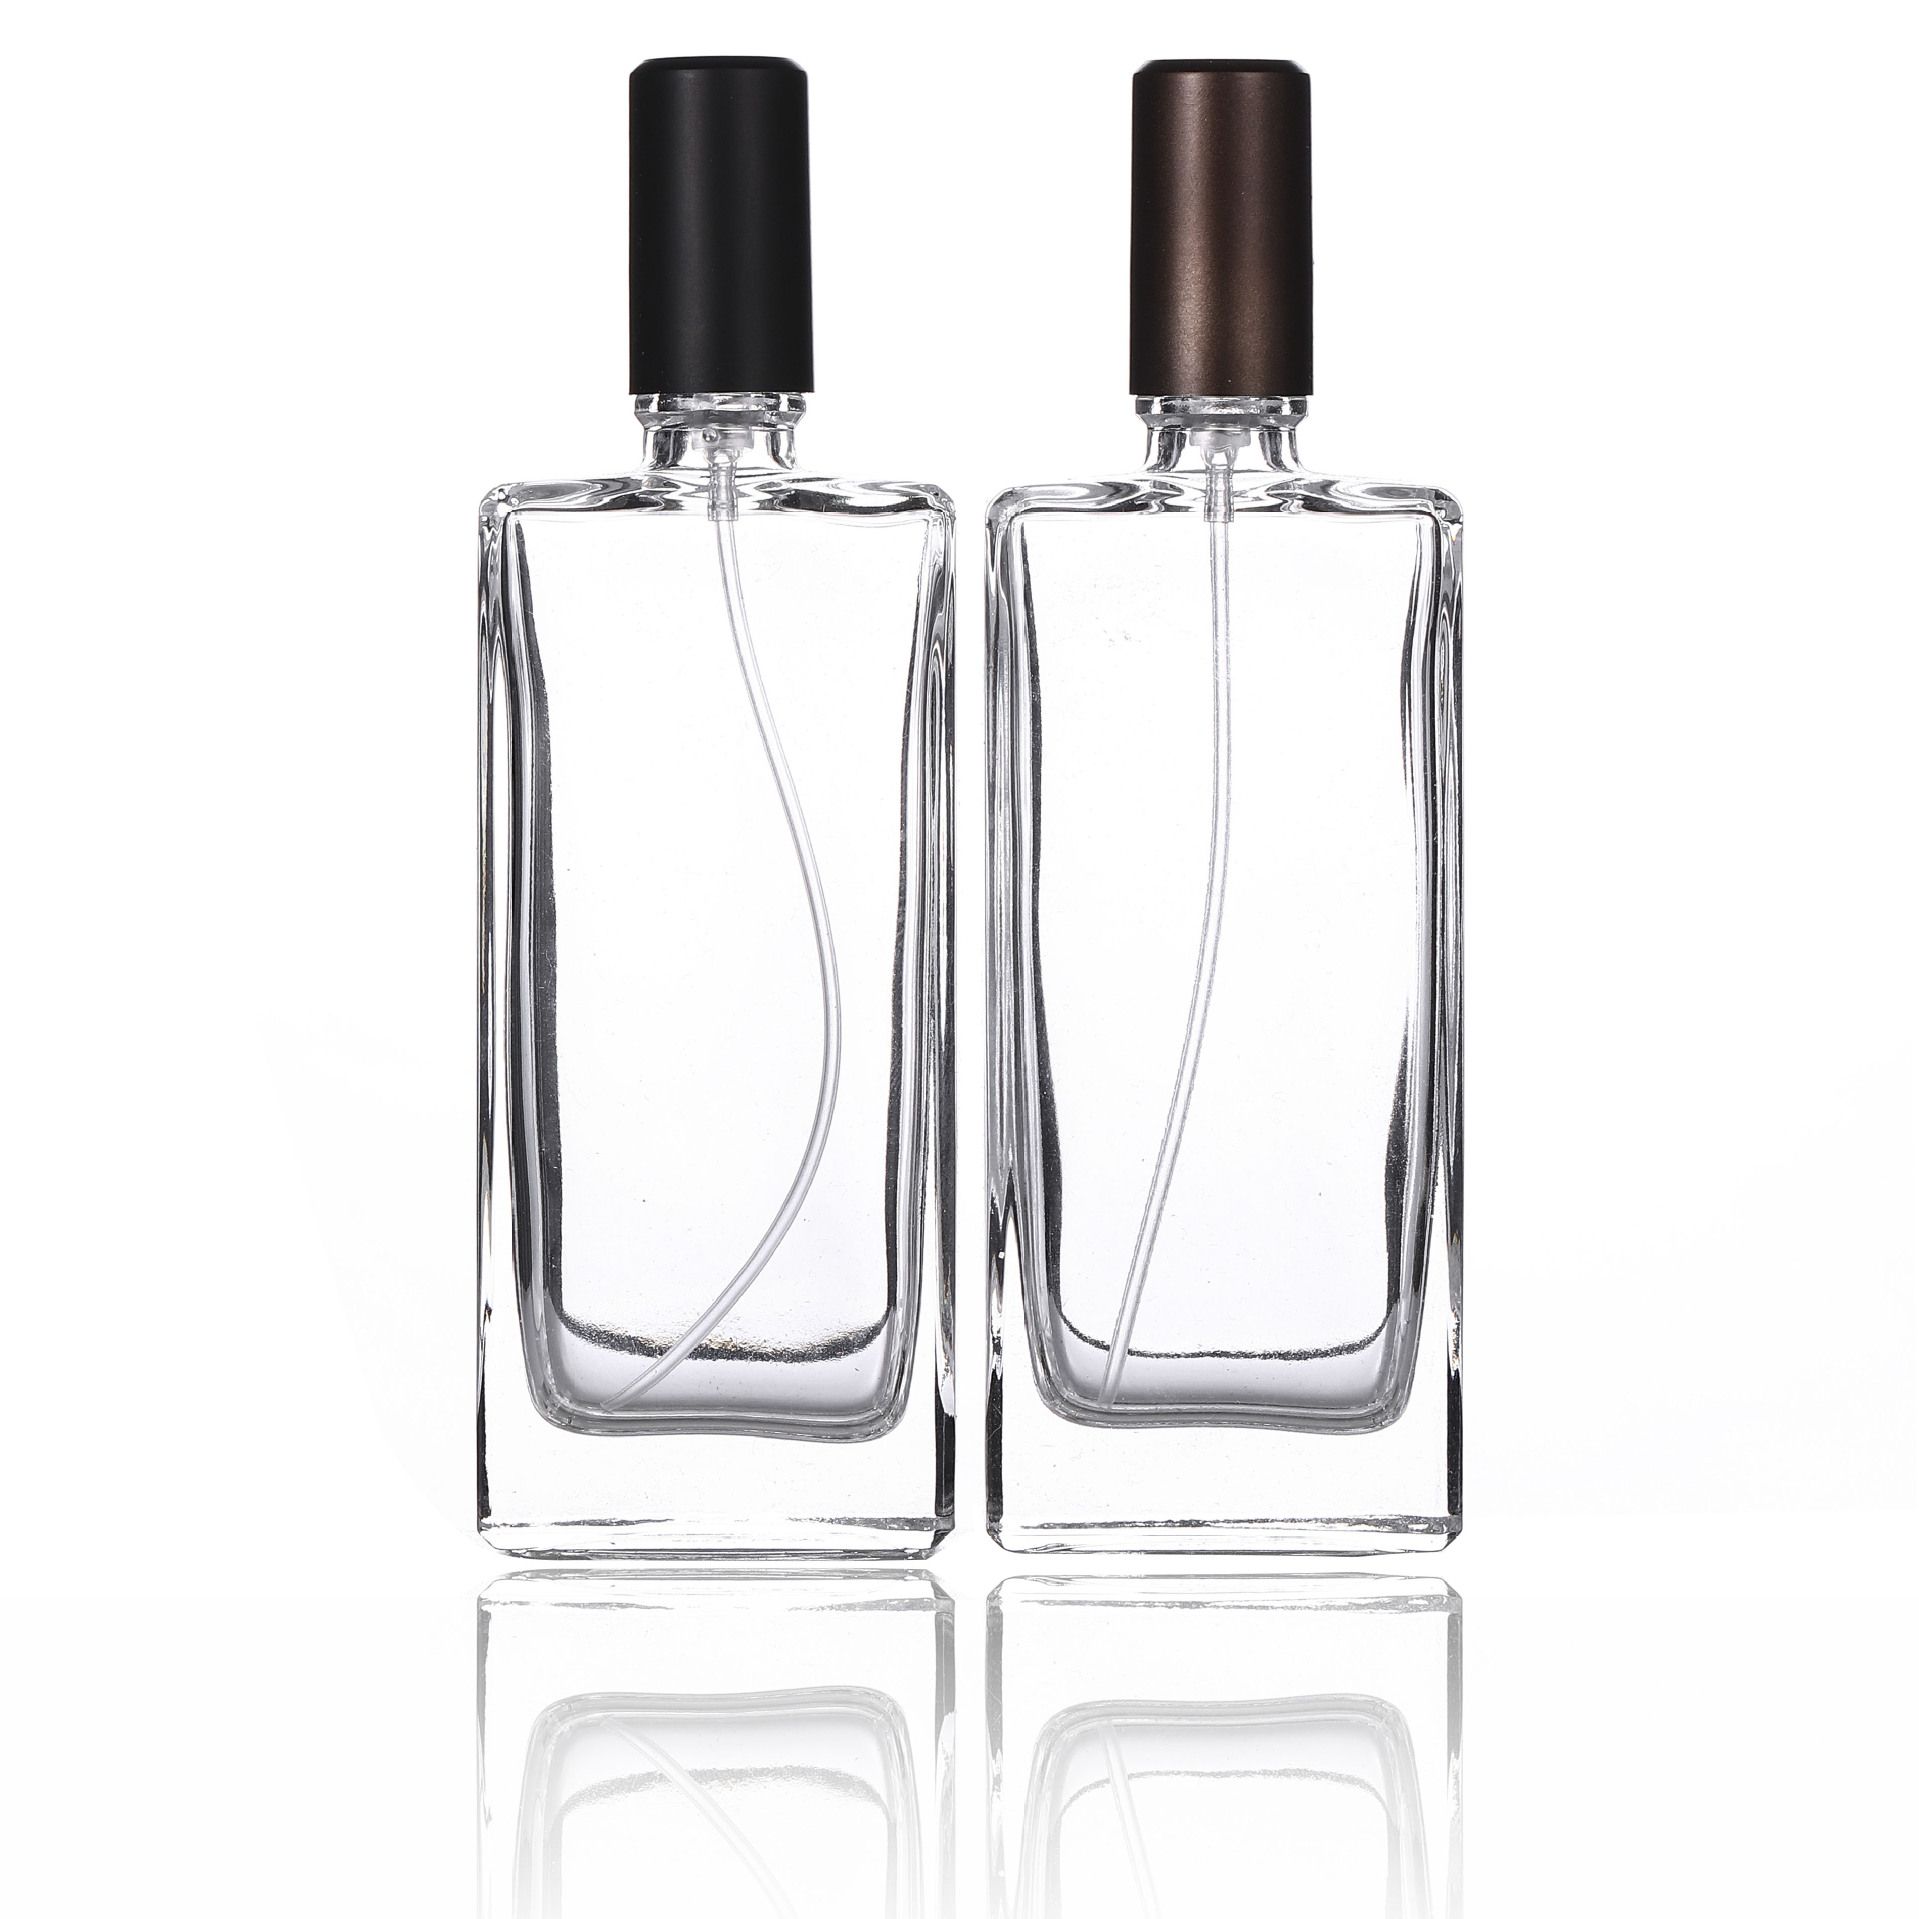 50ml bottle perfume